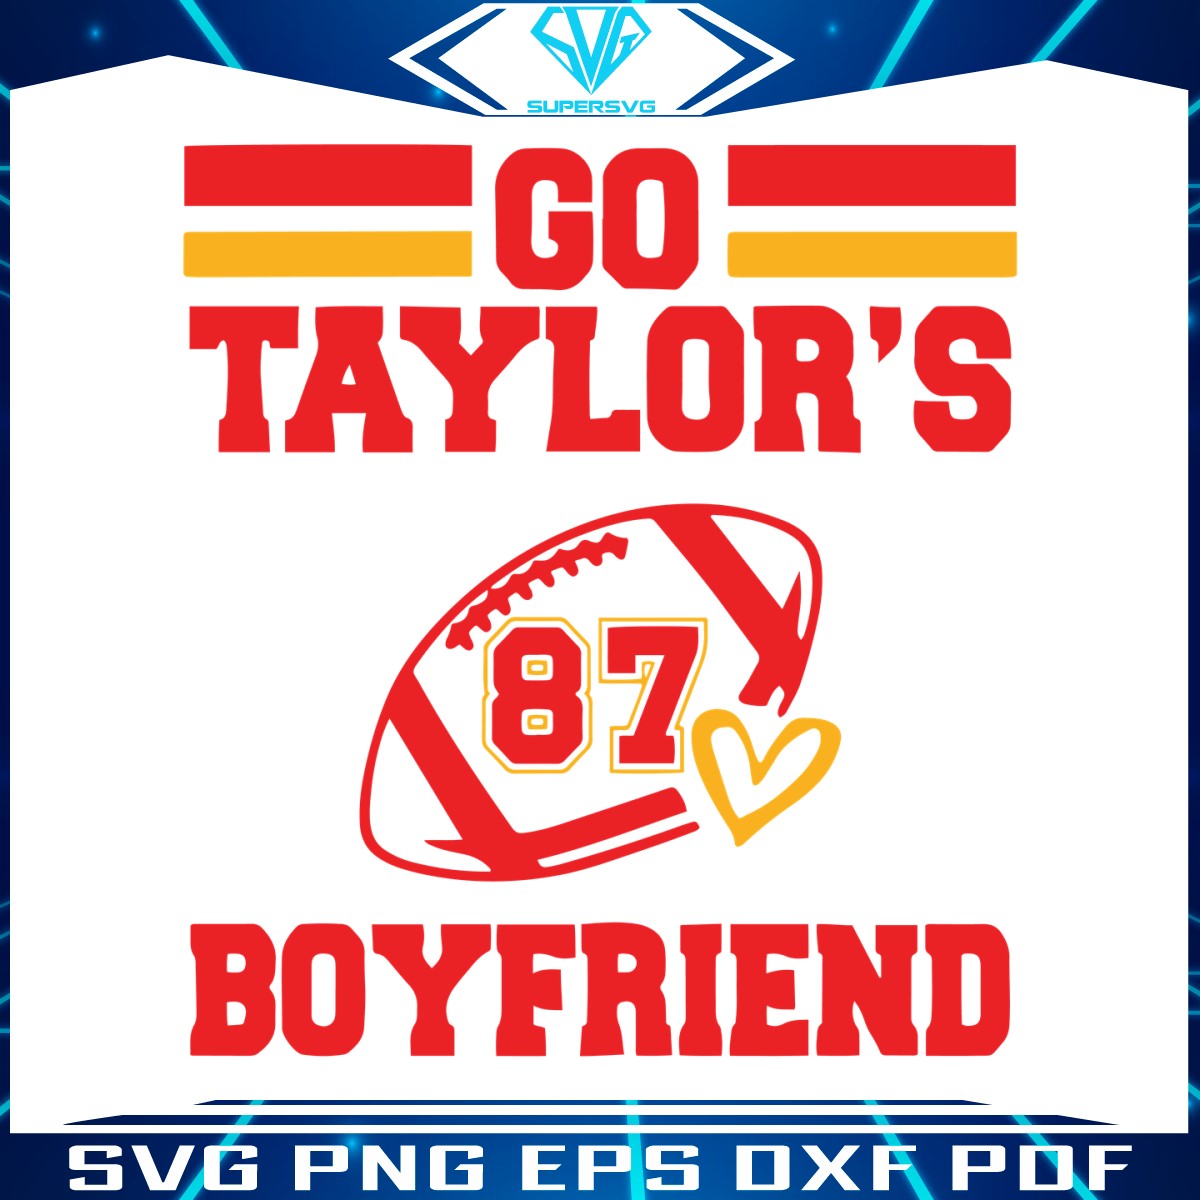 go-taylors-boyfriend-87-football-svg